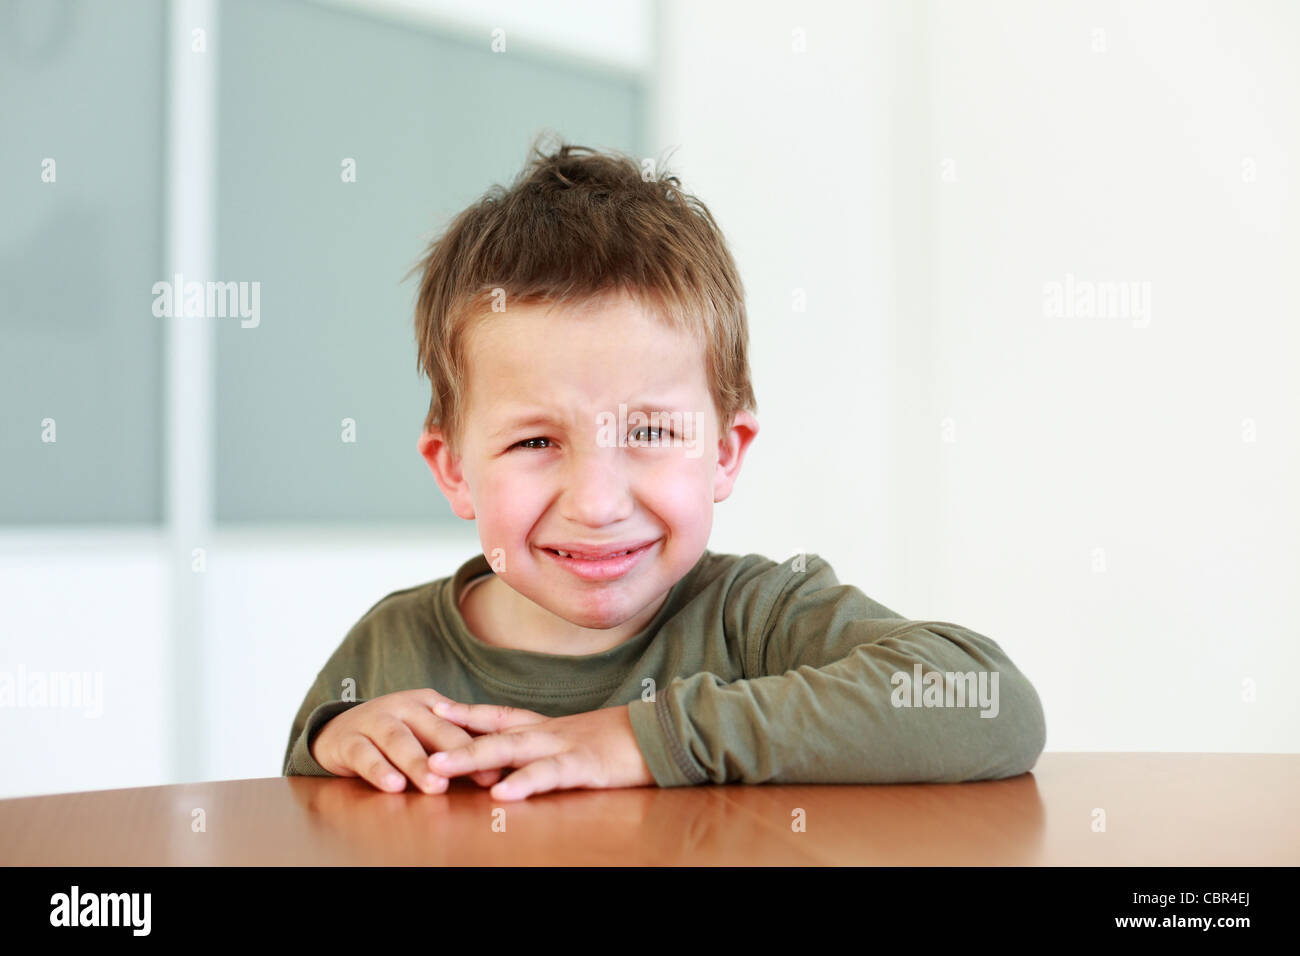 Sad boy crying Stock Photo - Alamy